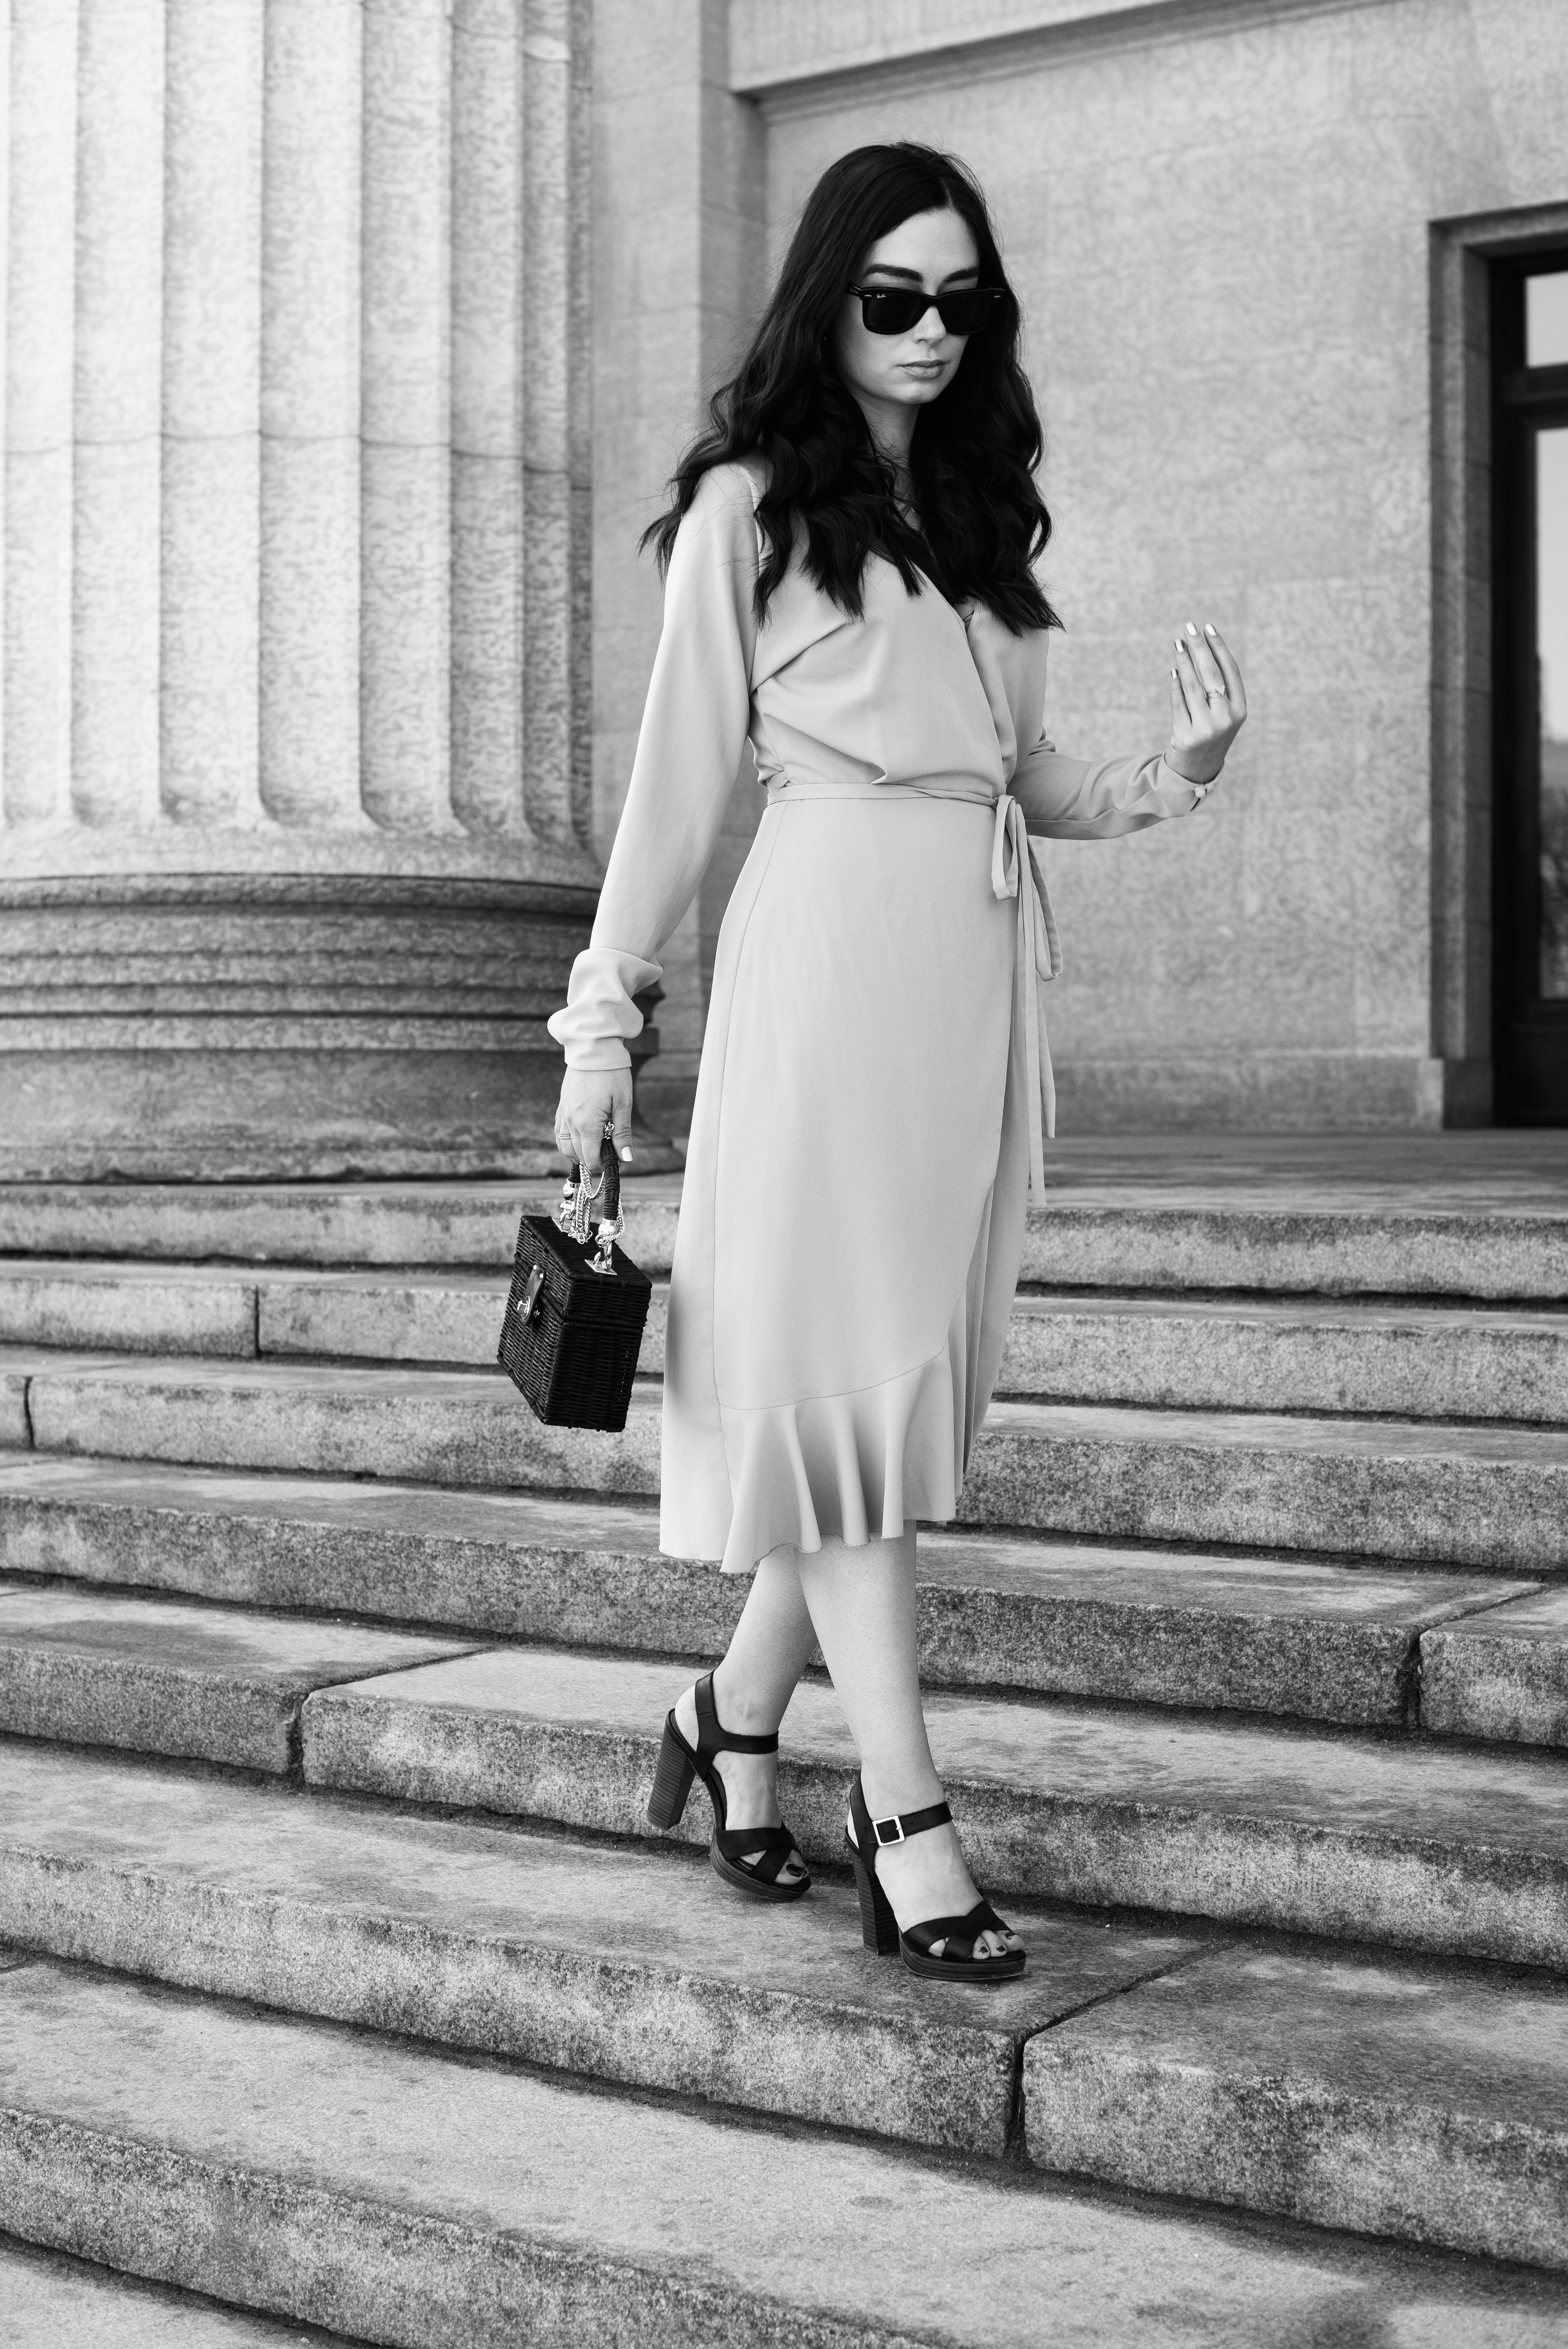 Top Winnipeg fashion blogger Cee Fardoe of Coco & Vera walks on the stairs of the Manitoba Legislature wearing an Aritzia dress and Le Chateau sandals